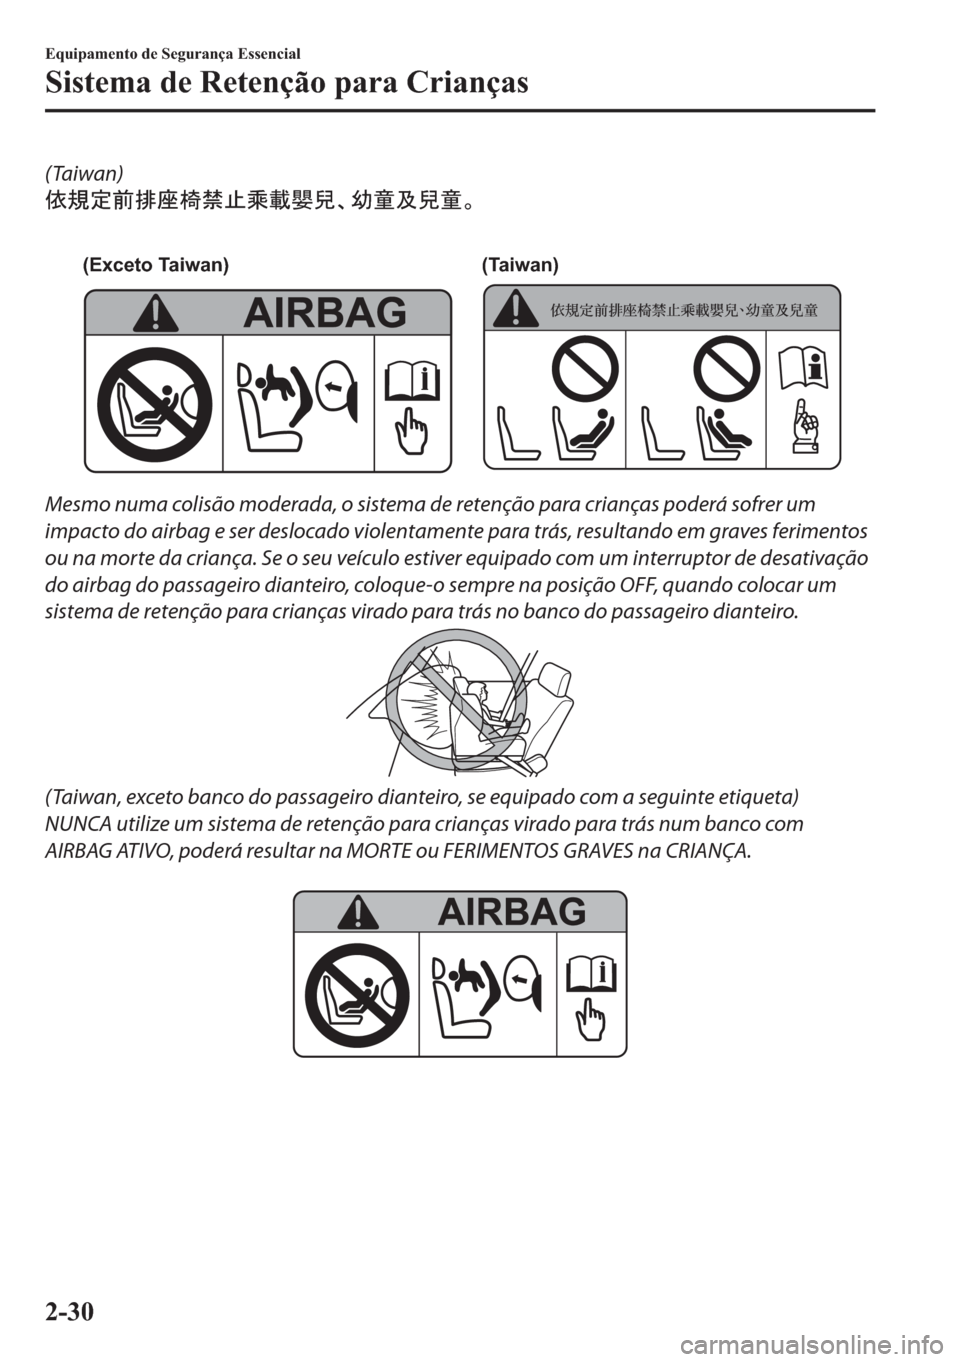 MAZDA MODEL 2 2019  Manual do proprietário (in Portuguese) (Taiwan)
k0dS<ÙÔ&—F
 
(Exceto Taiwan) (Taiwan)
Mesmo numa colisão moderada, o sistema de retenção para crianças poderá sofrer um
impacto do airbag e ser deslocado violentamente para 